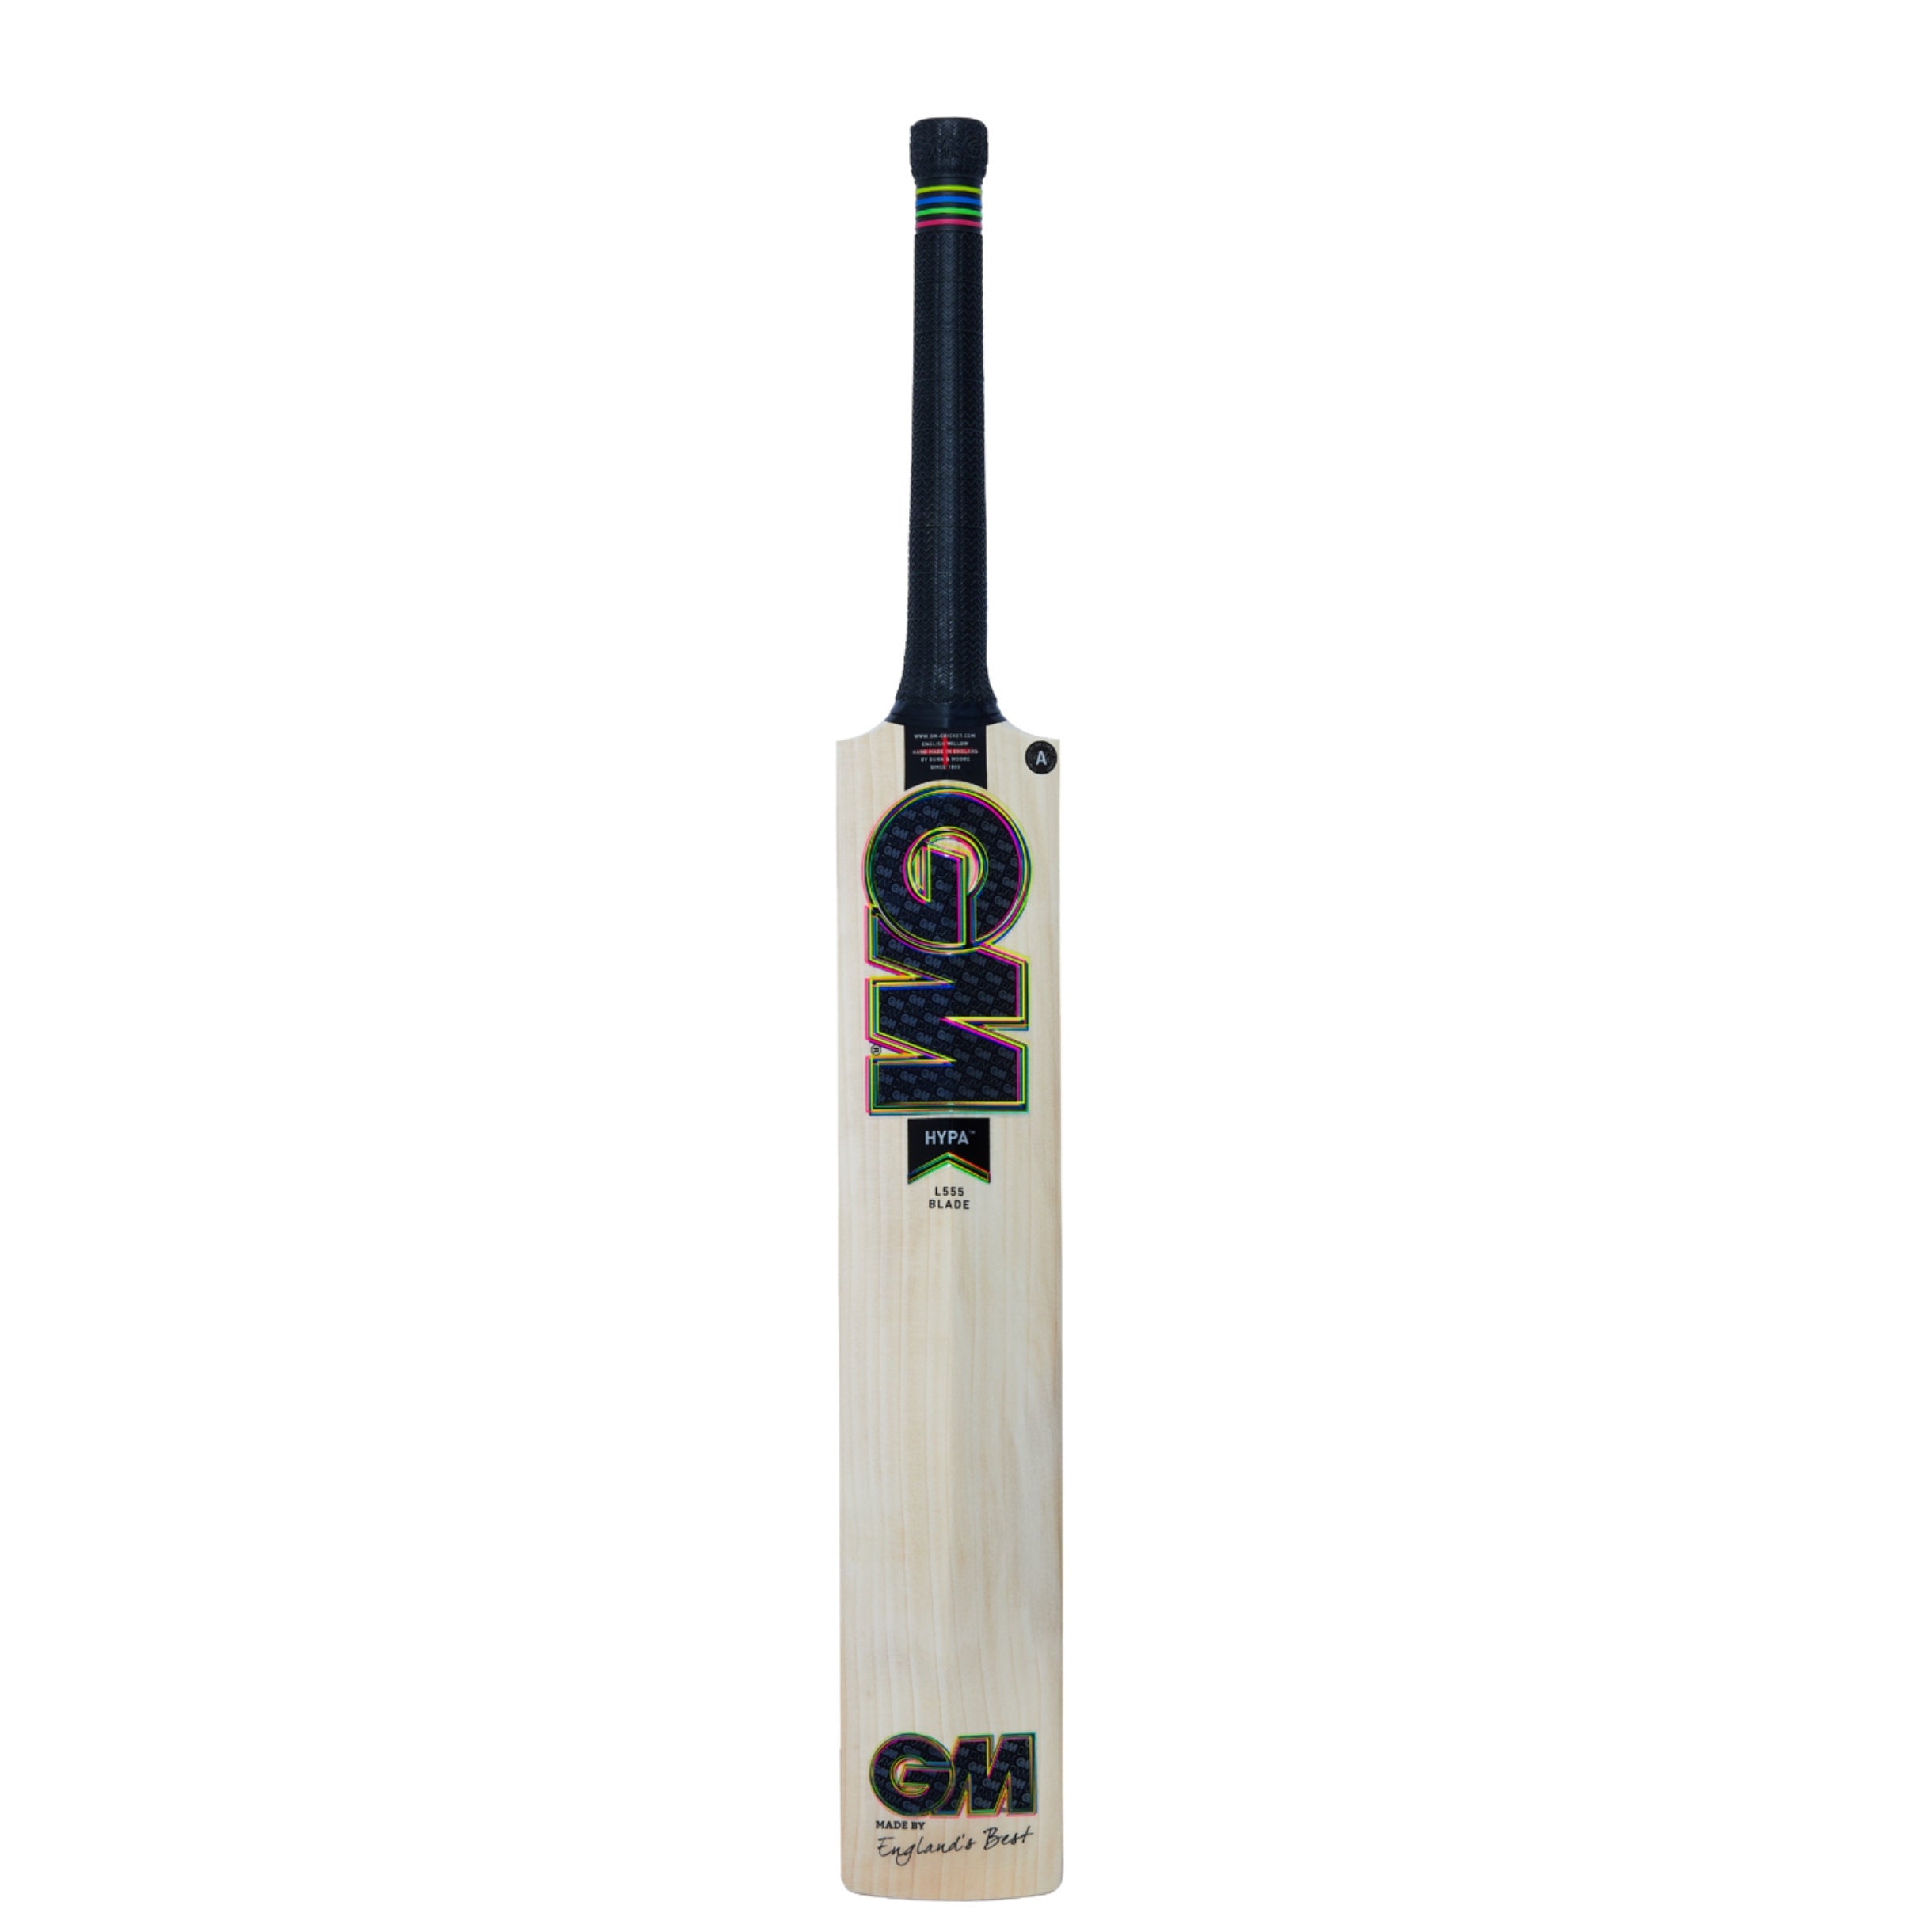 Gunn & Moore Cricket Bat Hypa Dxm 808 Senior